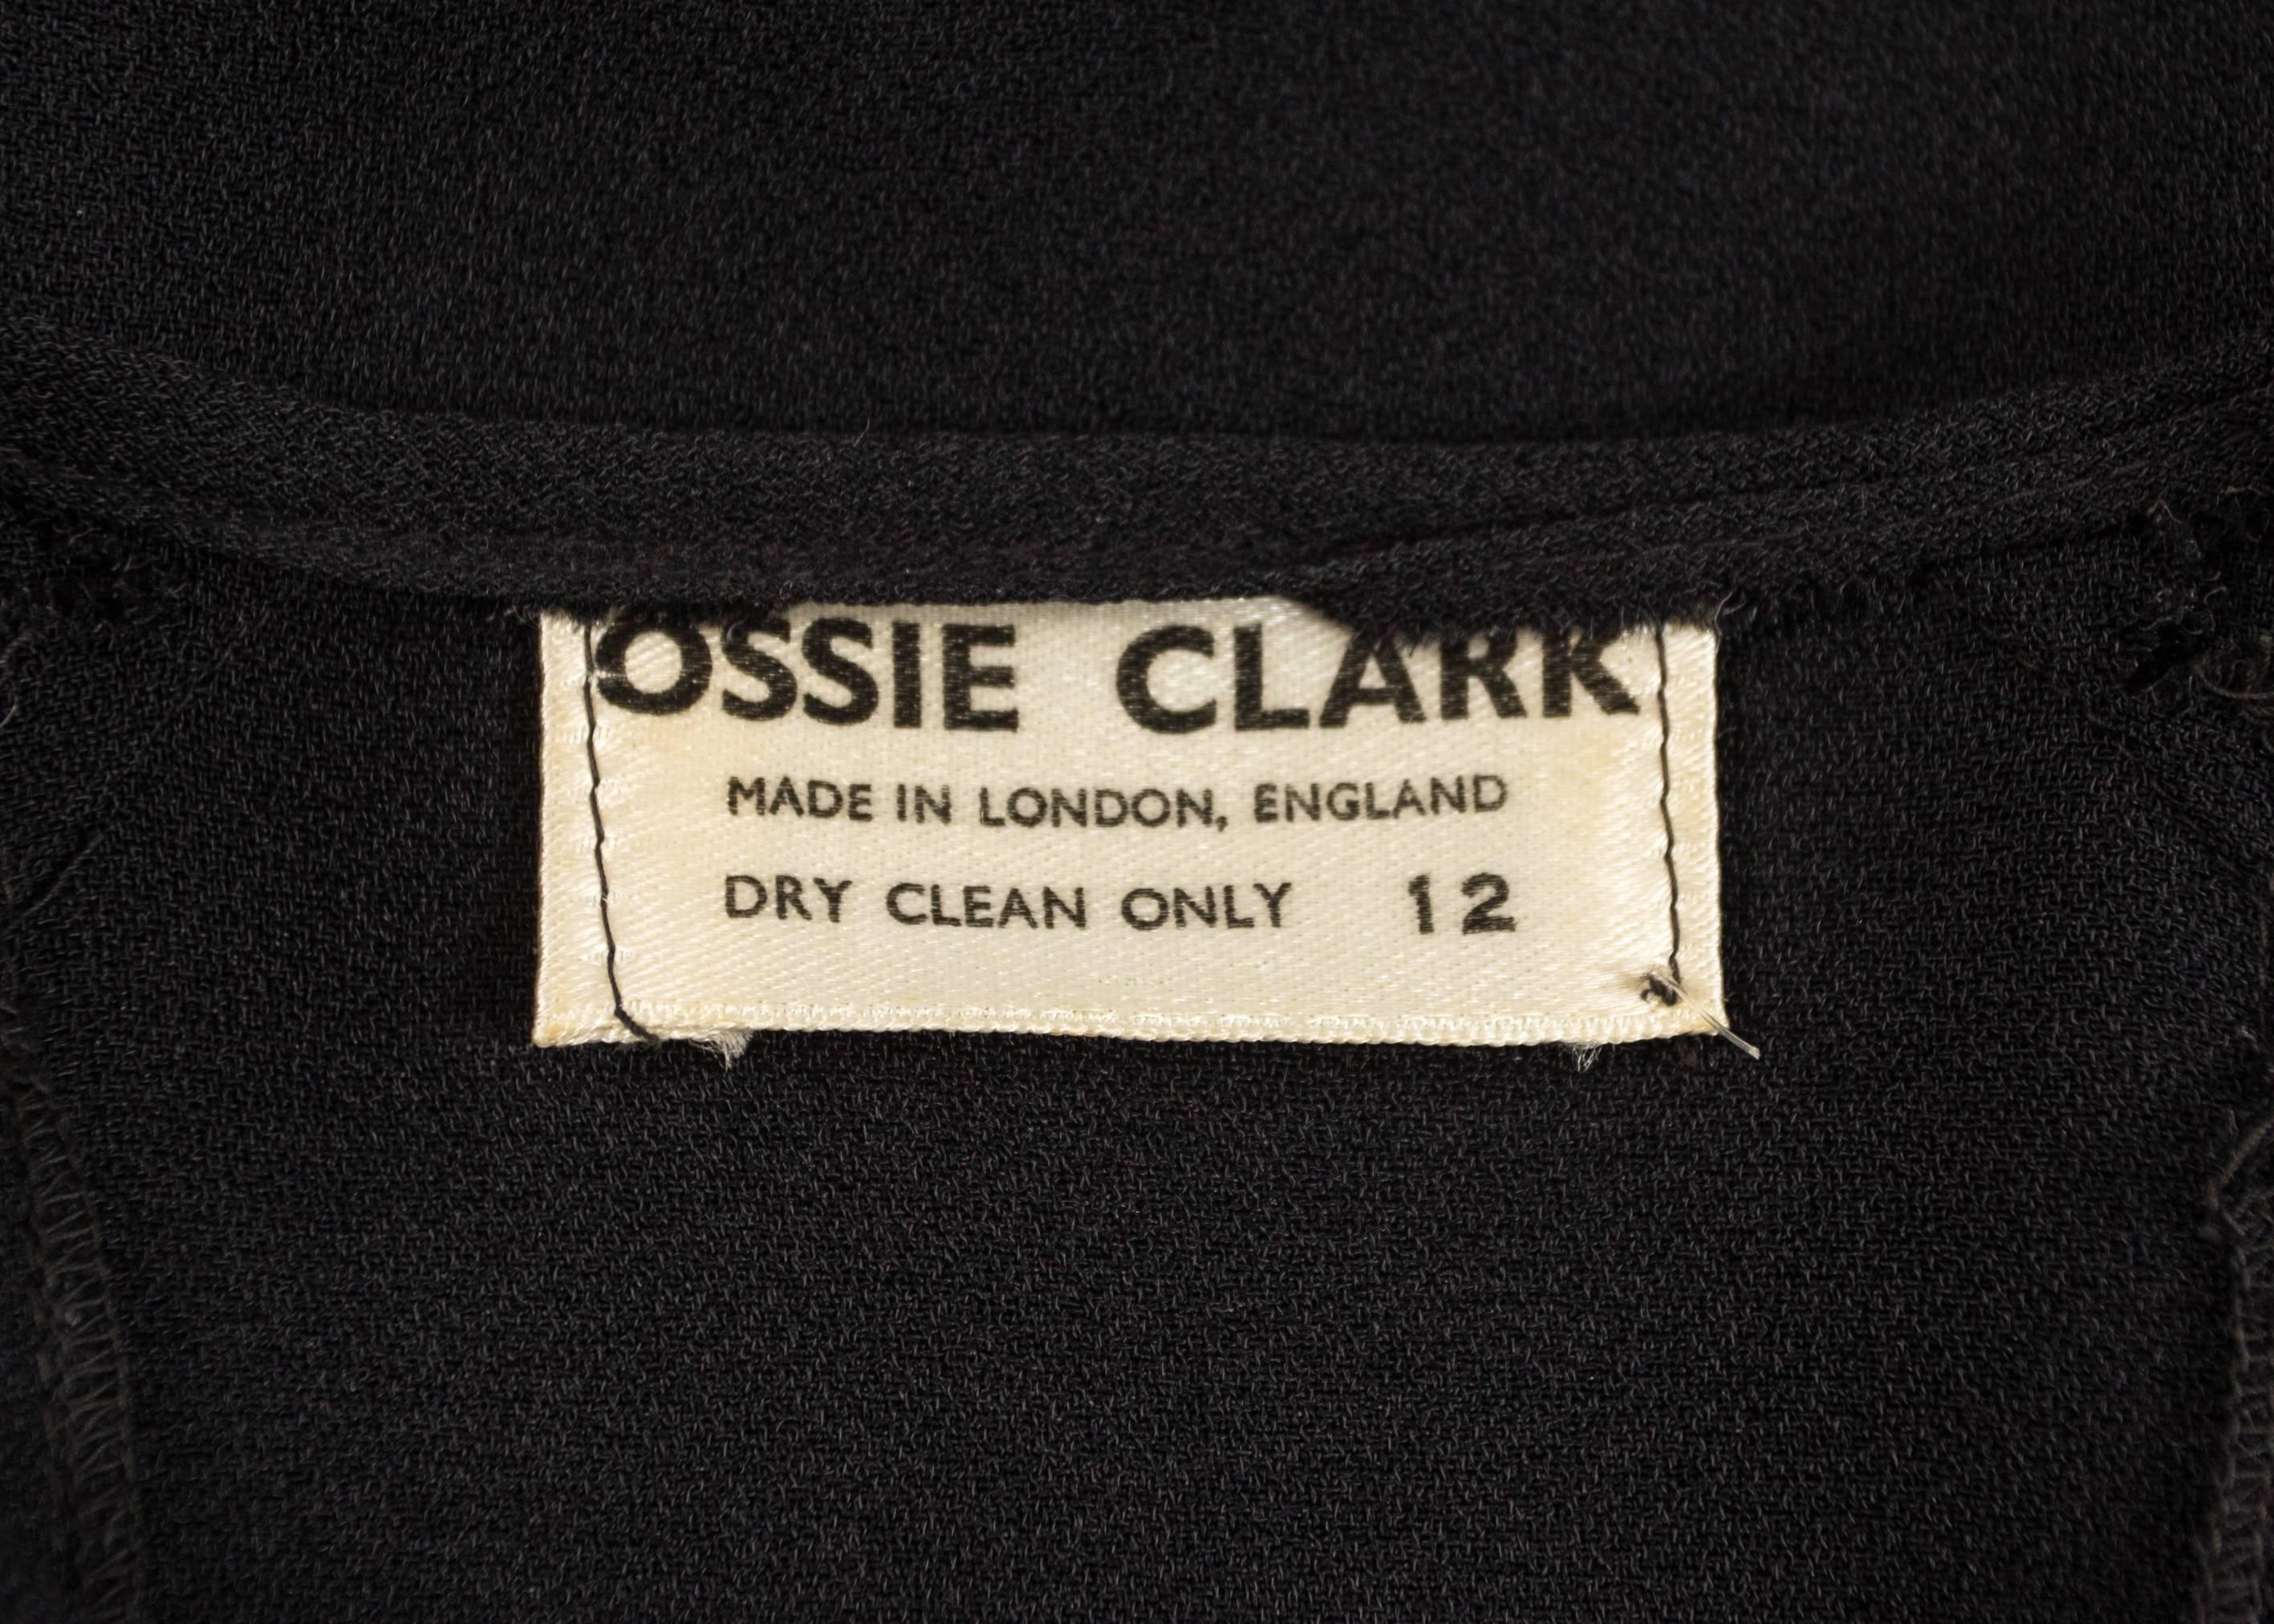 Ossie Clark 1970 black moss crepe pant suit  For Sale 1